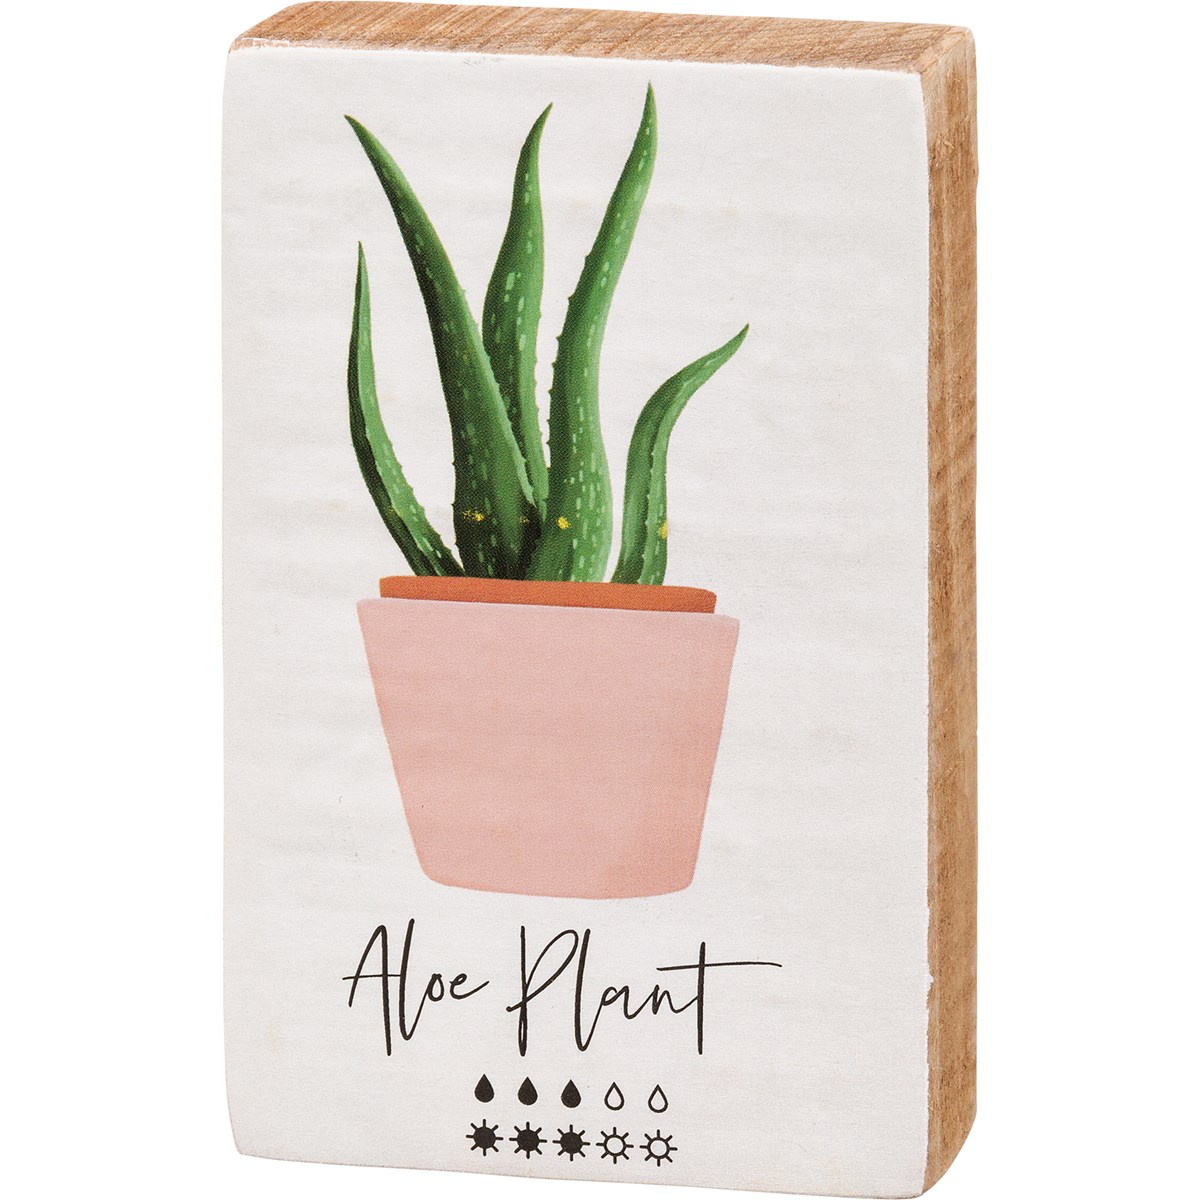 Aloe Plant Block Sign - Wood, Paper